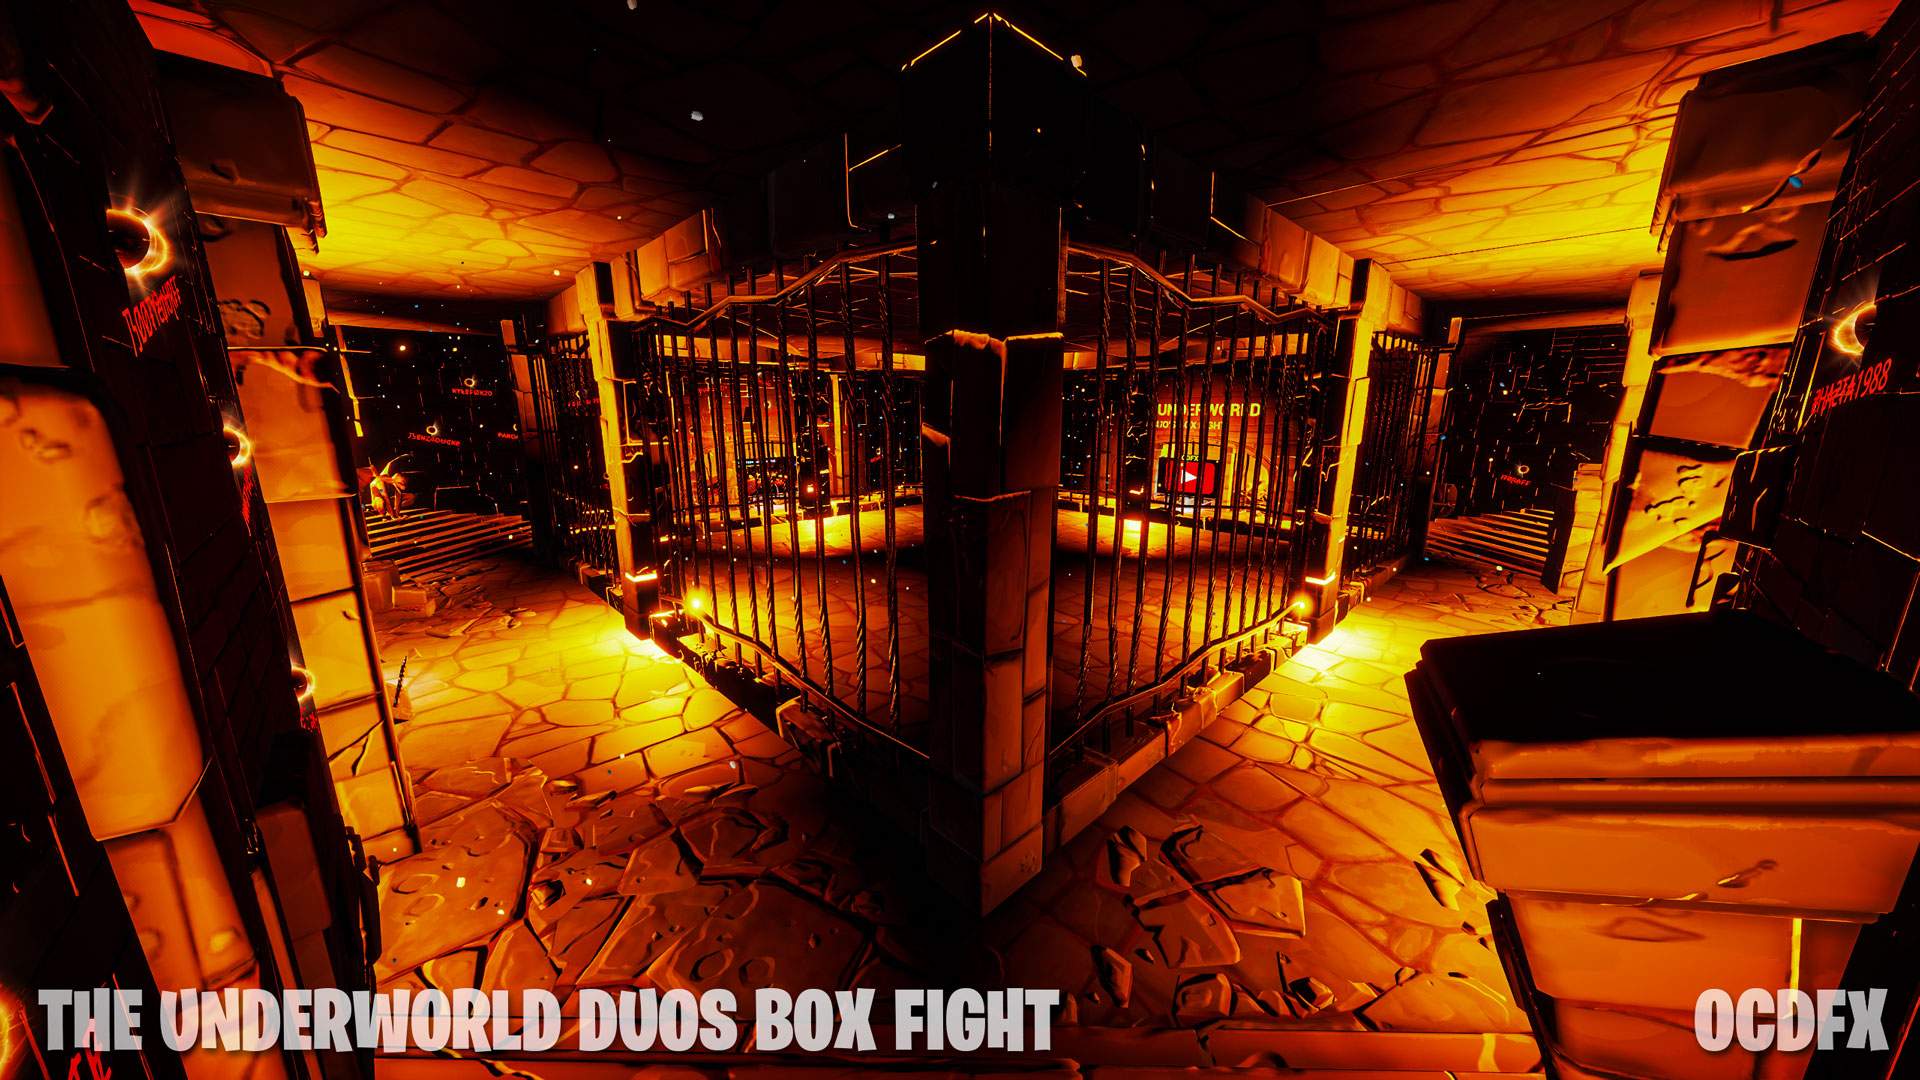 THE UNDERWORLD - DUO'S BOX FIGHT image 2